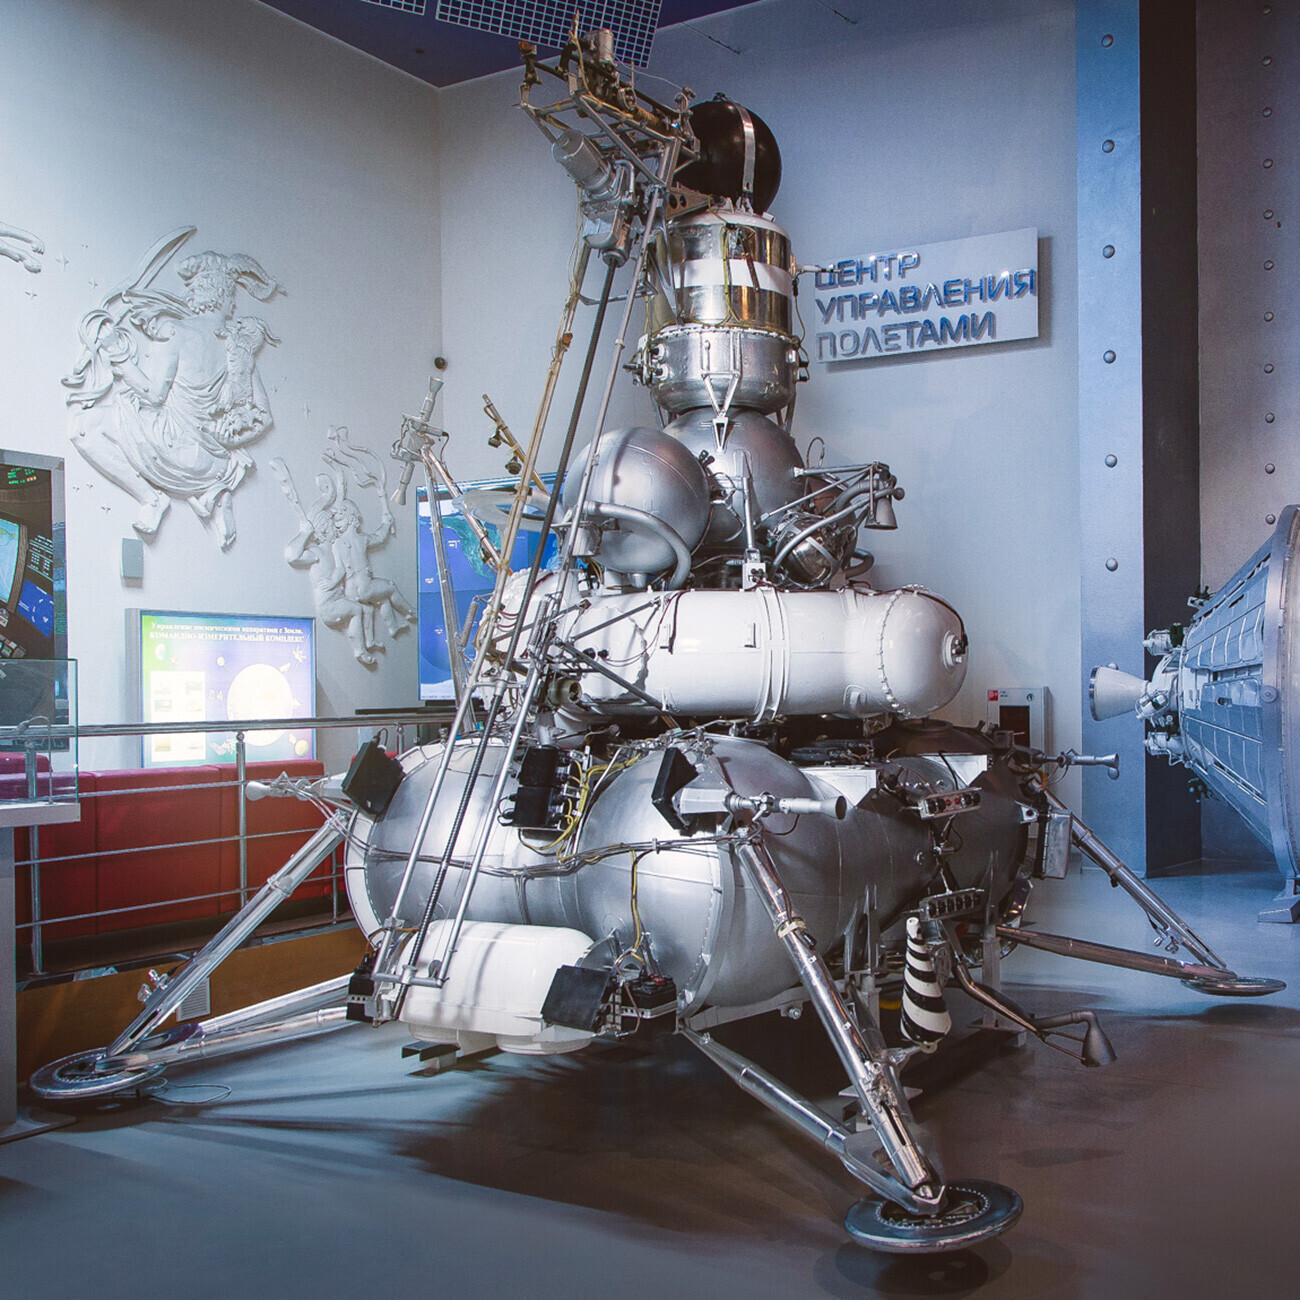 Советские аппараты луна. АМС «Луна-24». Луна-24 автоматическая межпланетная. Луна-20 автоматическая межпланетная станция. Автоматическая станция Луна-25.